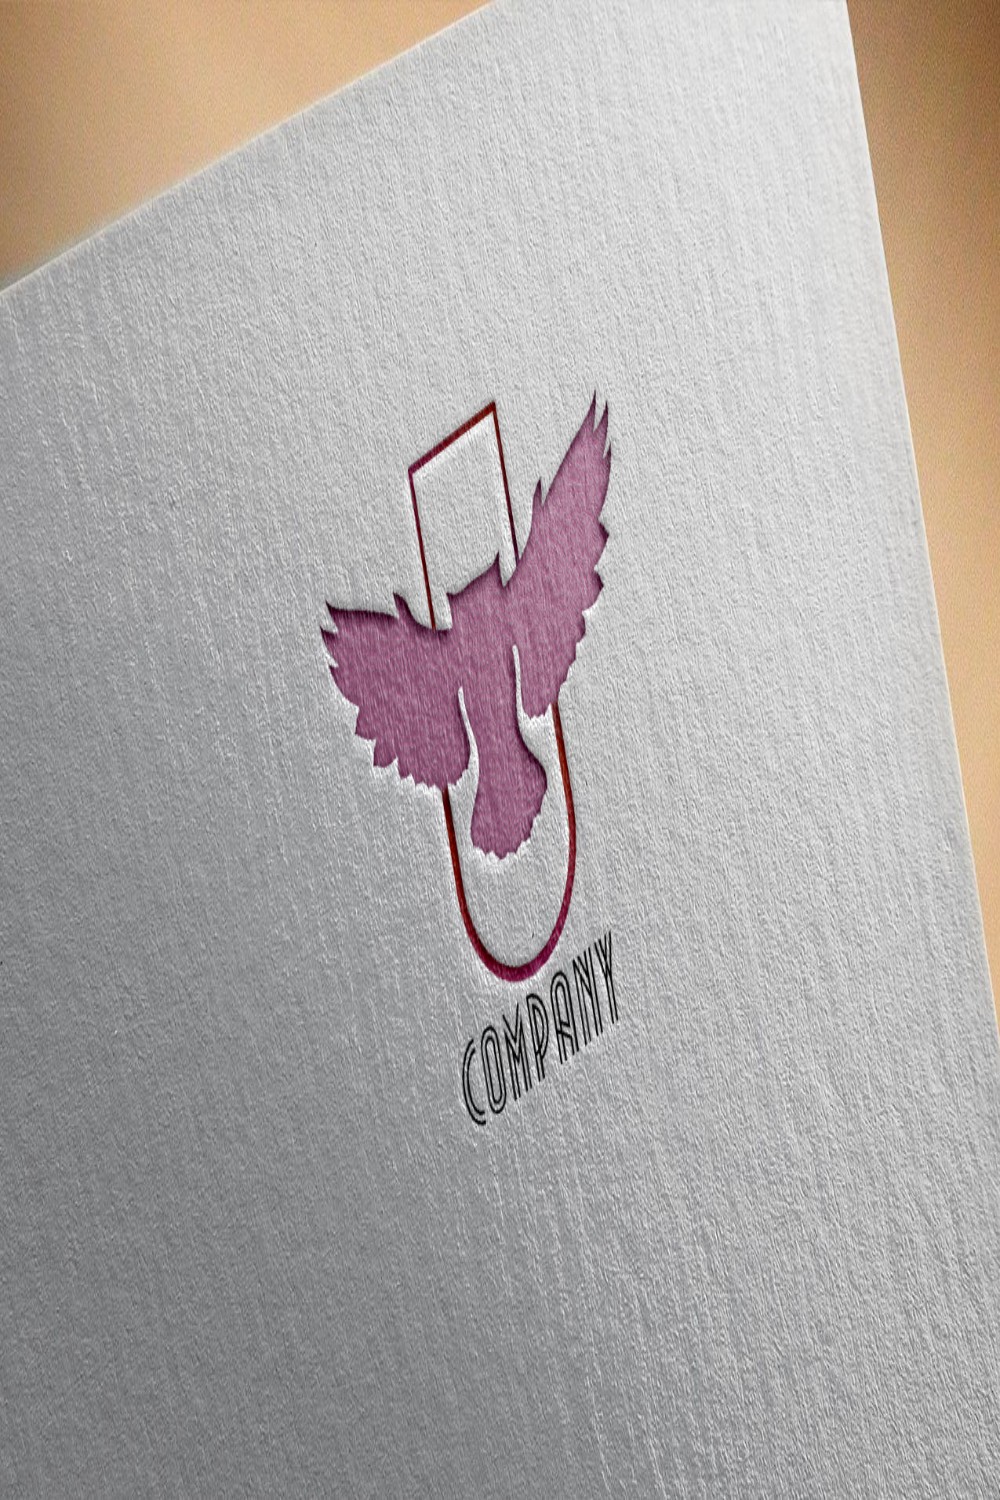 Owl Company Logo Design Pinterest image.